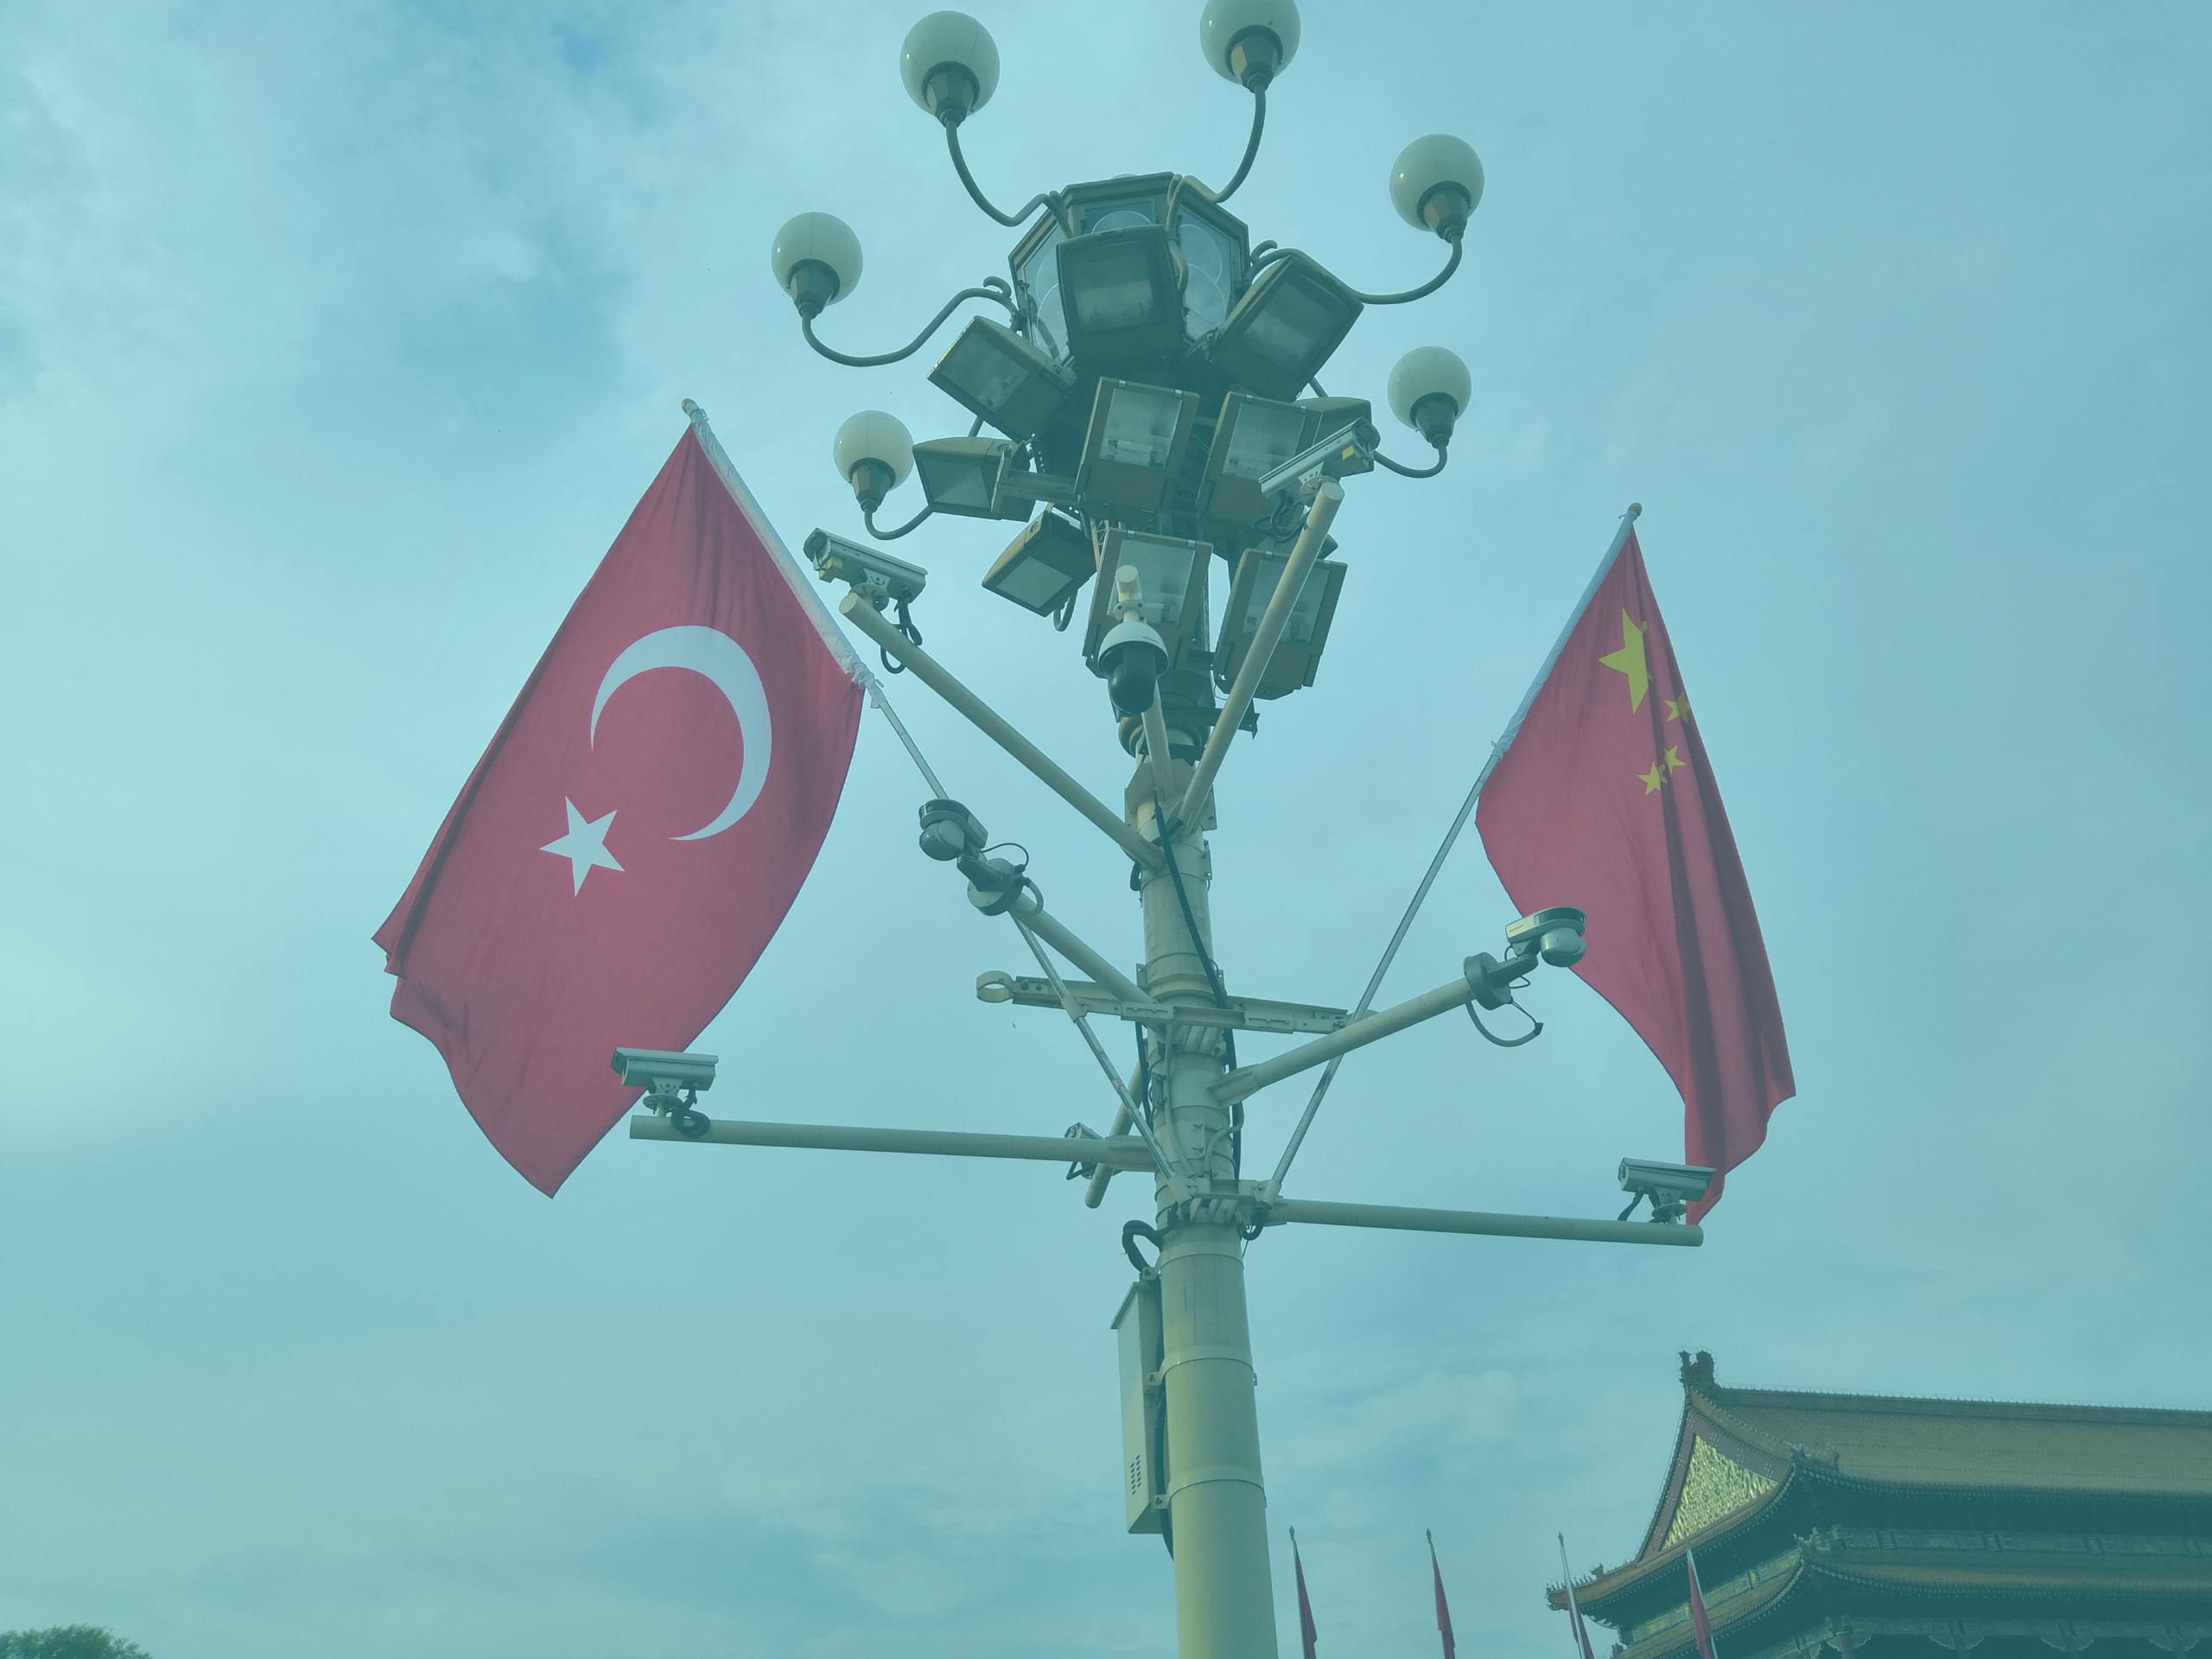 Gözde Yilmaz and Nilgün Eliküçük Yıldırım – Authoritarian diffusion or cooperation? Turkey’s emerging engagement with China